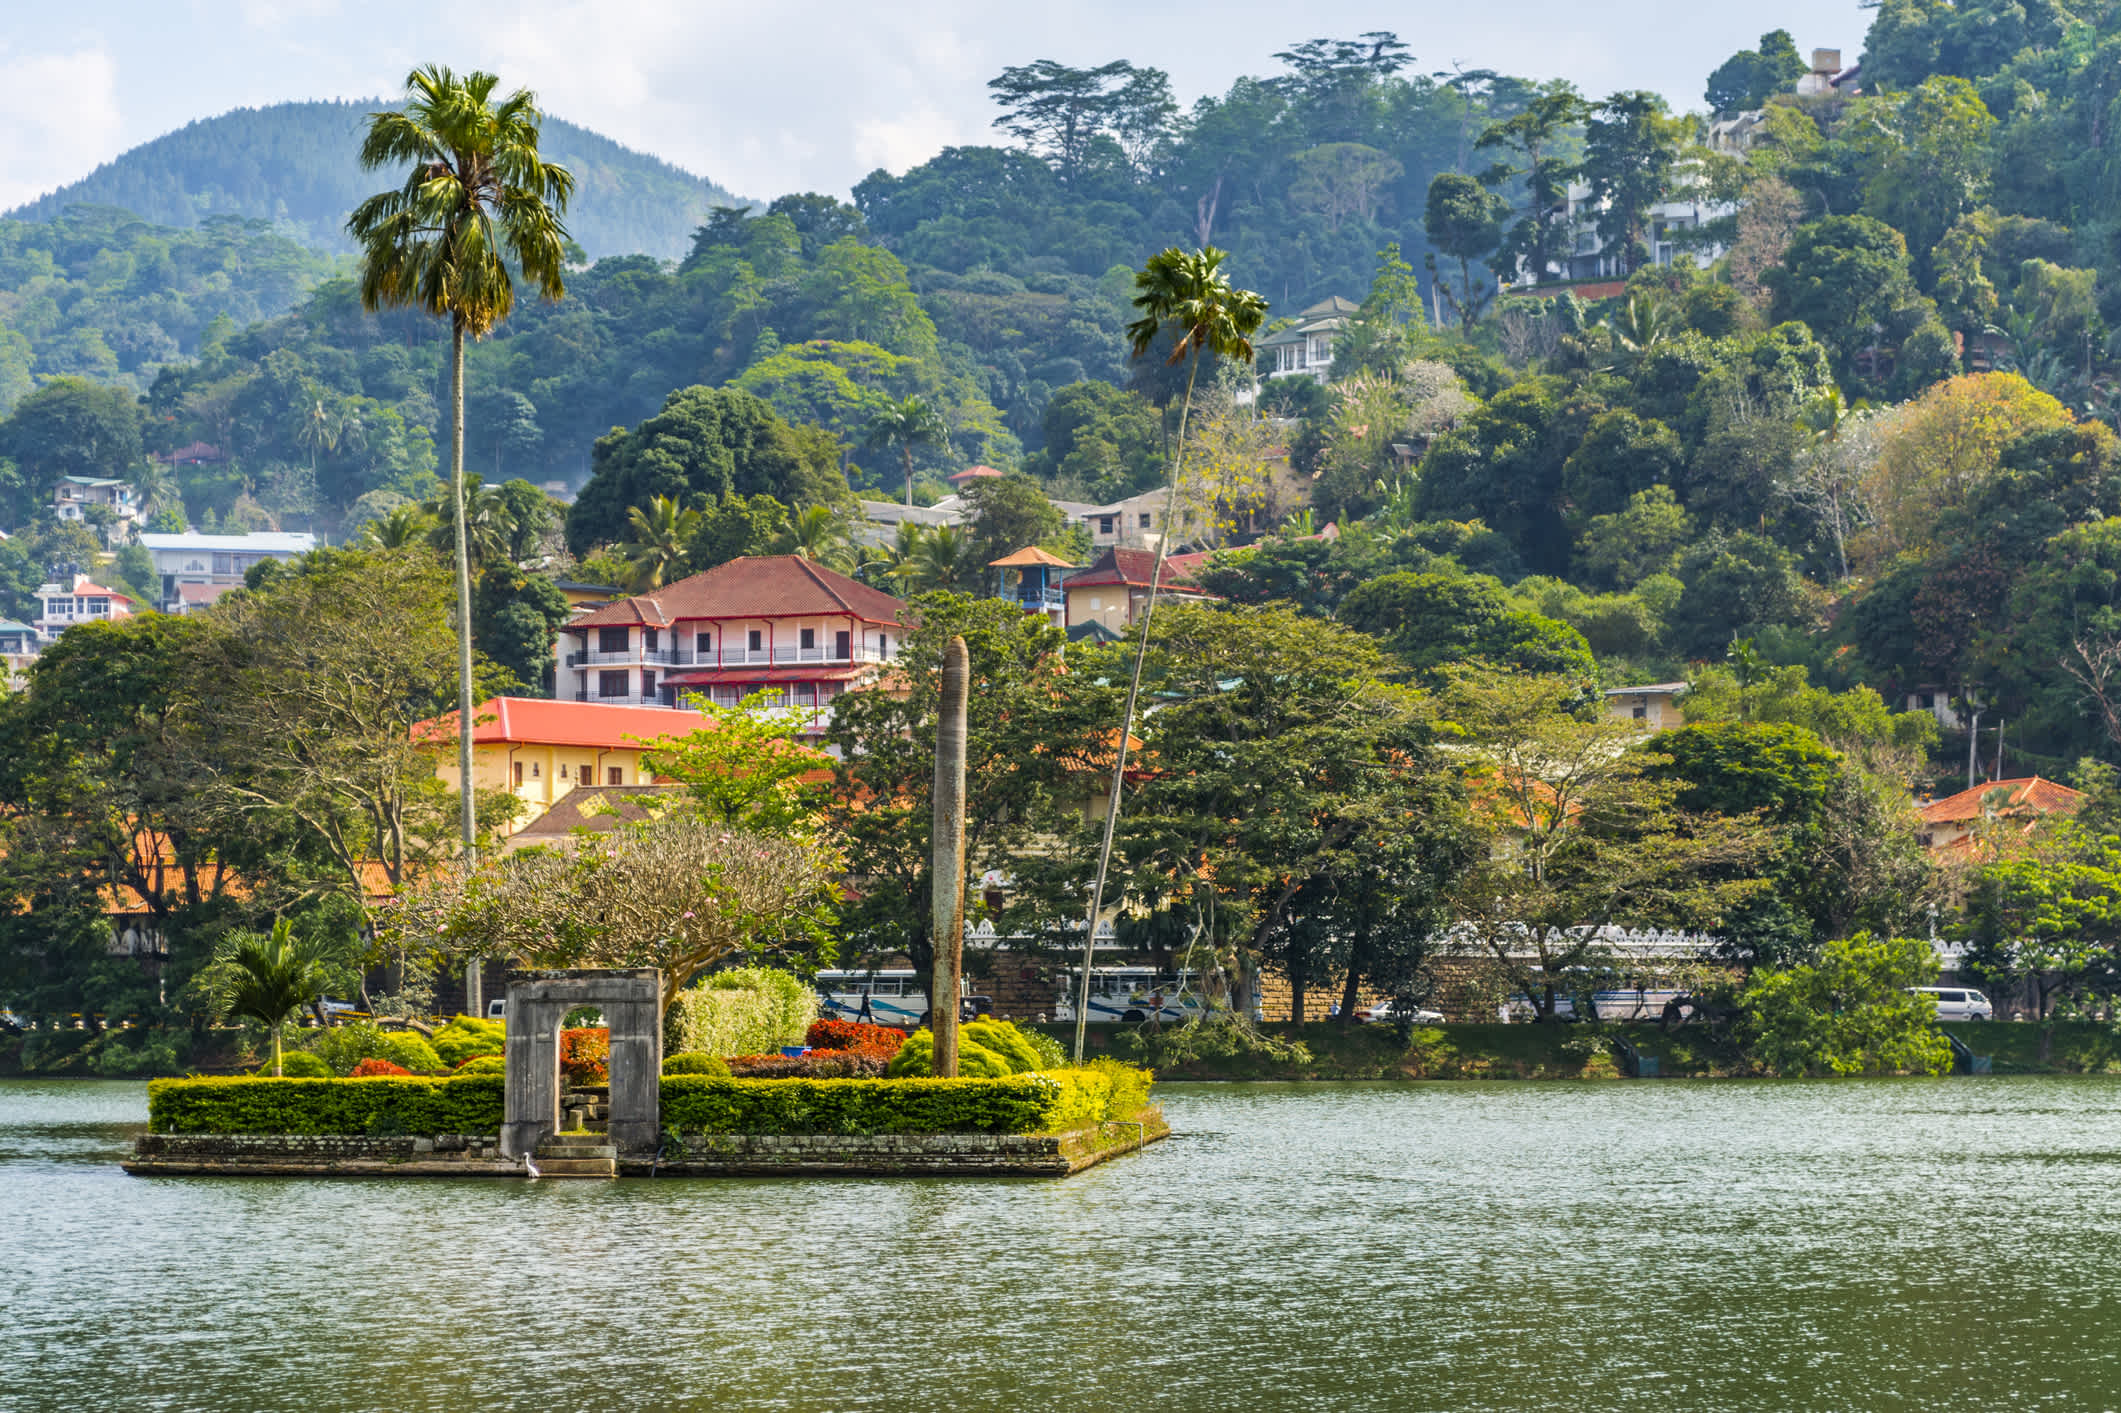 Insel in Kandy Lake, Kandy, Sri Lanka